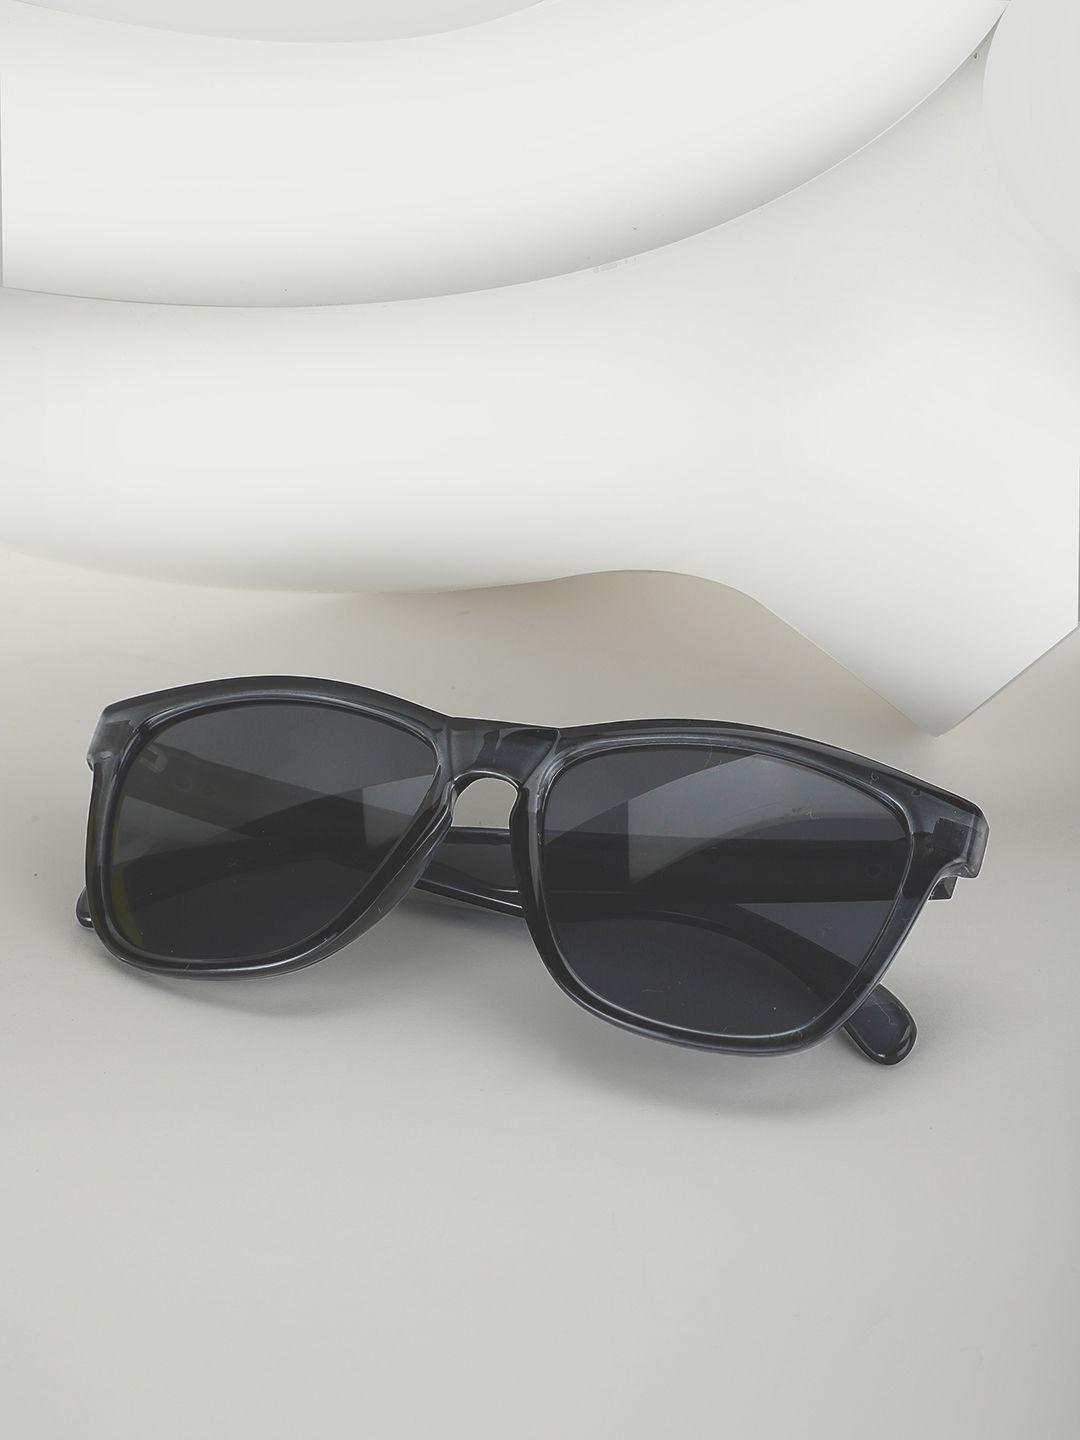 carlton-london-men-black-square-sunglasses-with-uv-protected-lens-80152